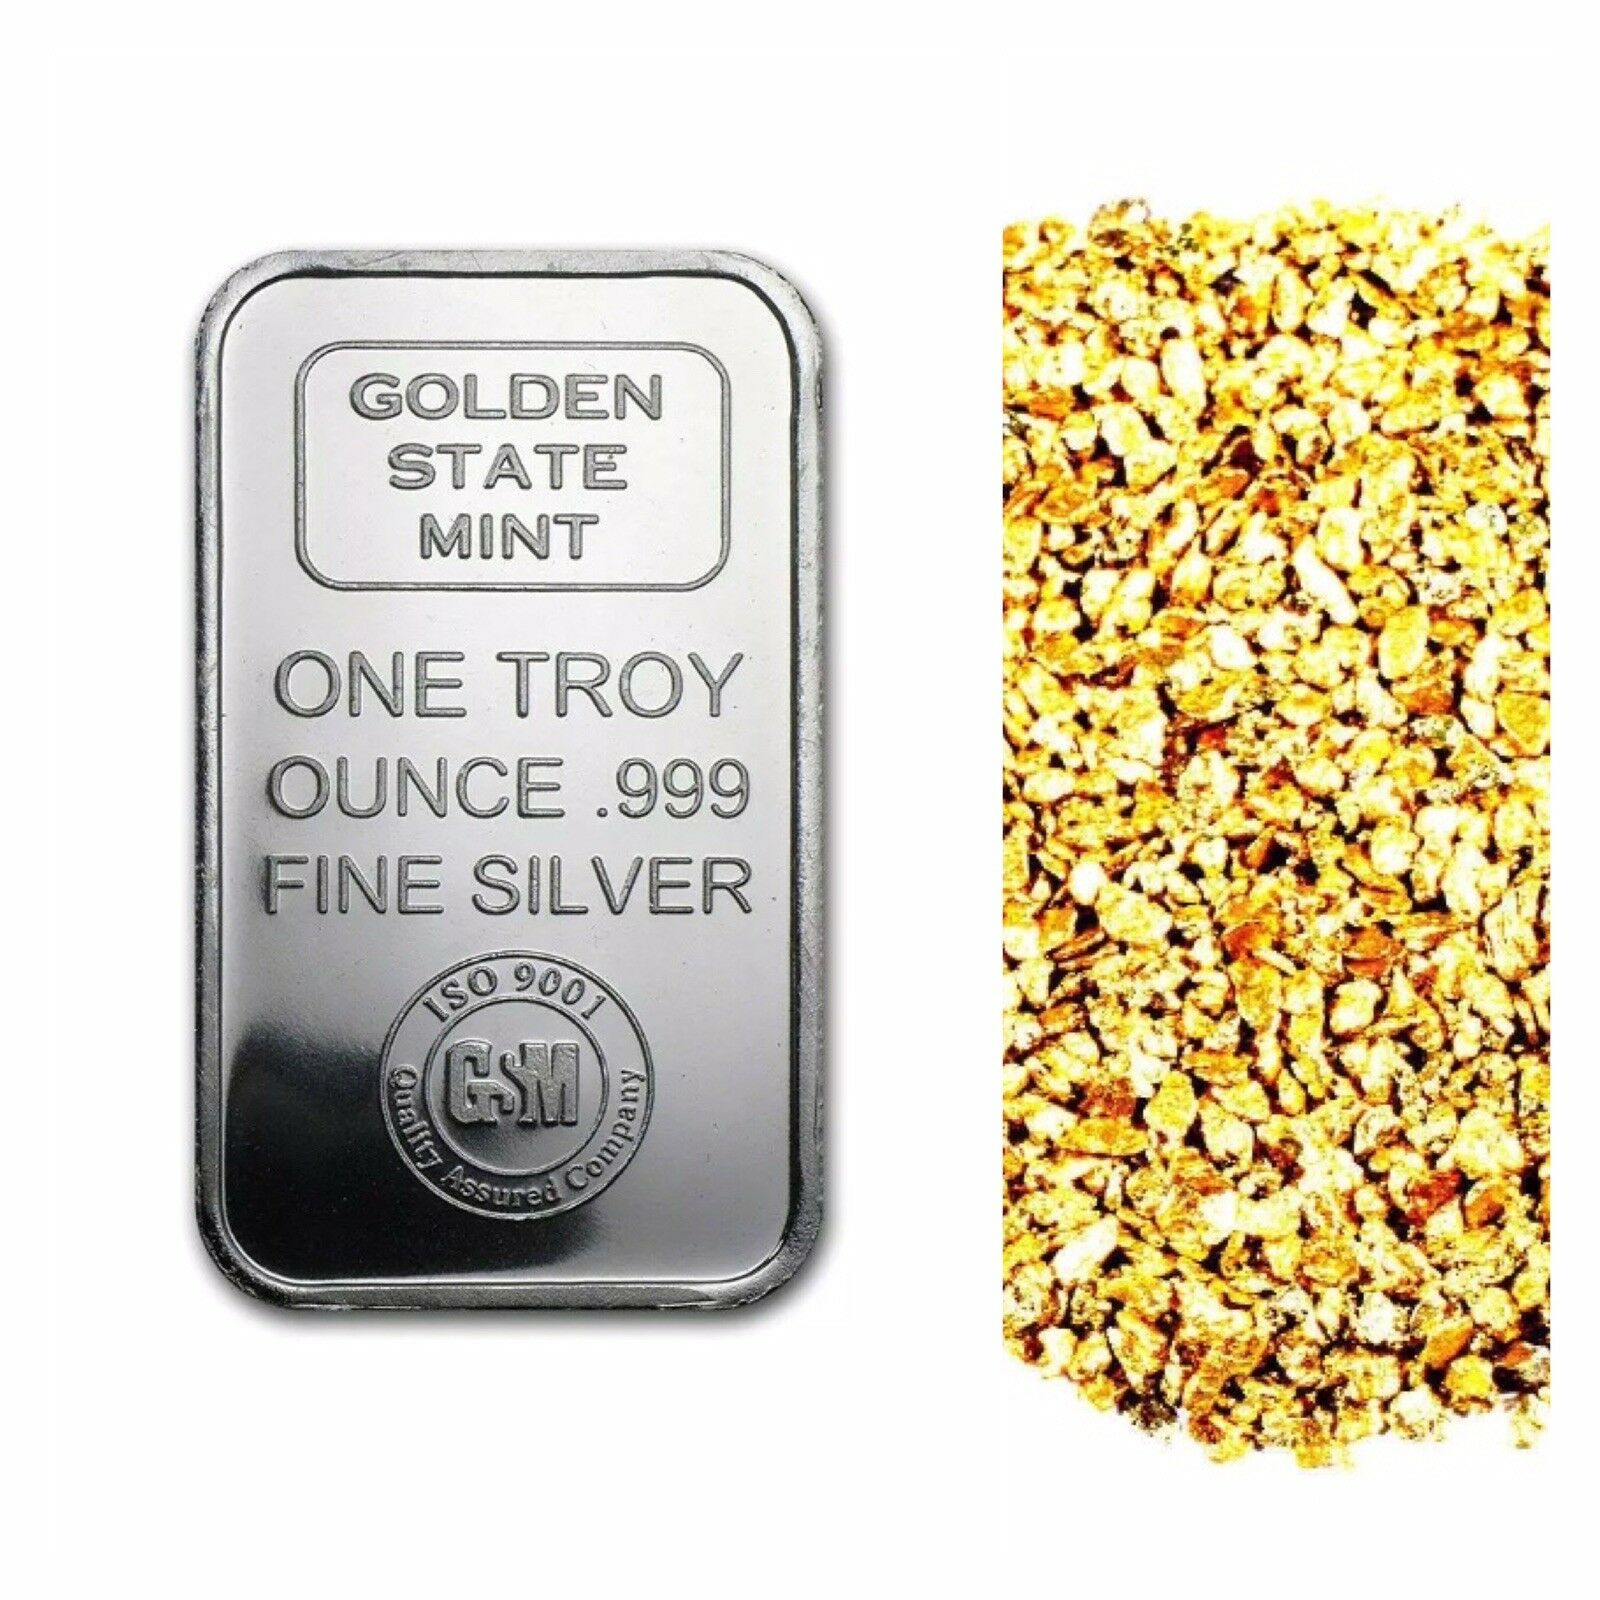 1 TROY OZ .999 SILVER GOLDEN STATE MINT ISO BAR BU + 10 PIECE ALASKAN PURE GOLD NUGGETS - Liquidbullion